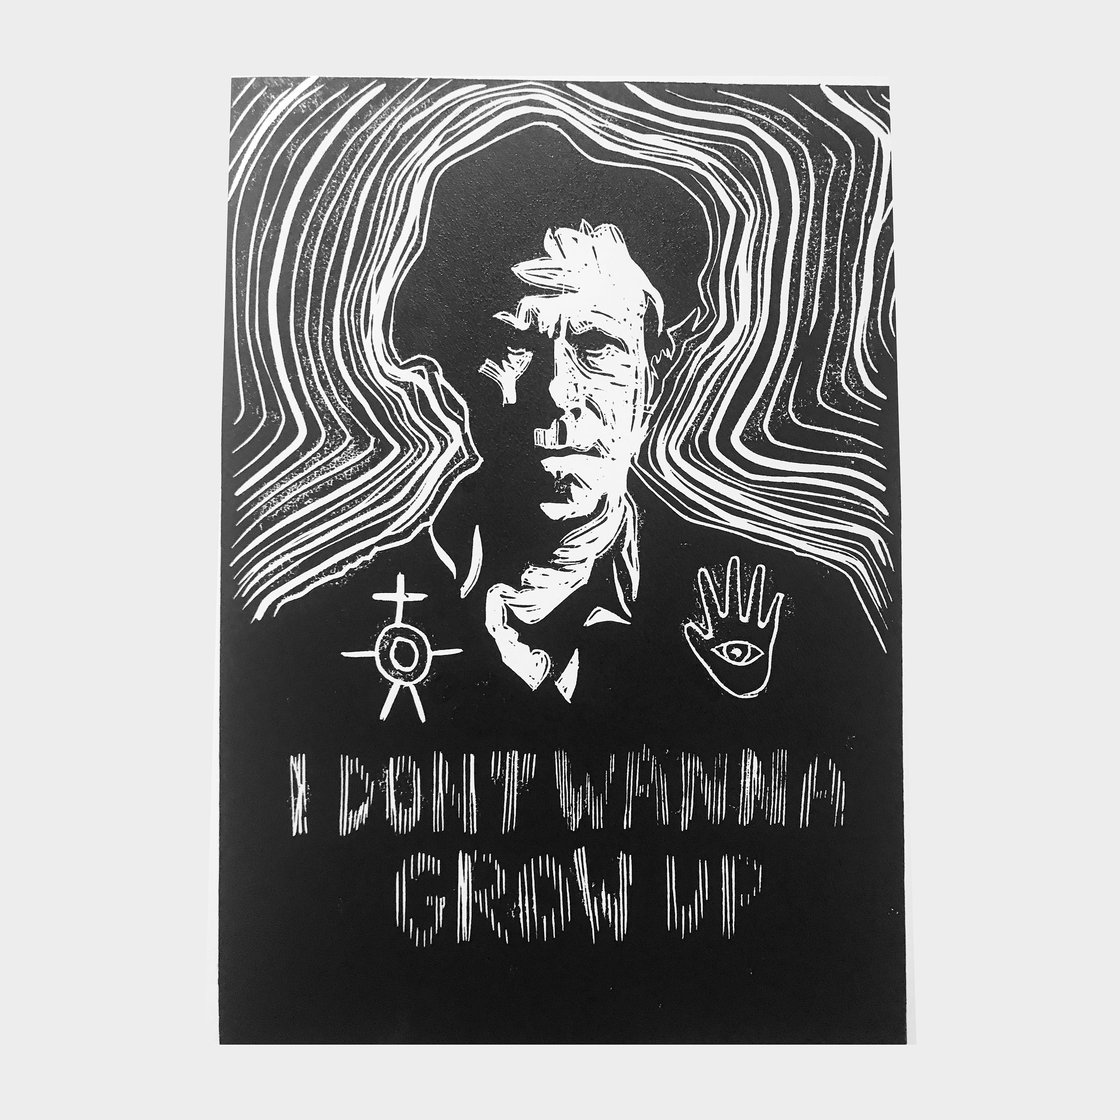 Image of Tom Waits. I Don't Wanna Grow up. Handmade A4 Linocut print on zerkall paper.